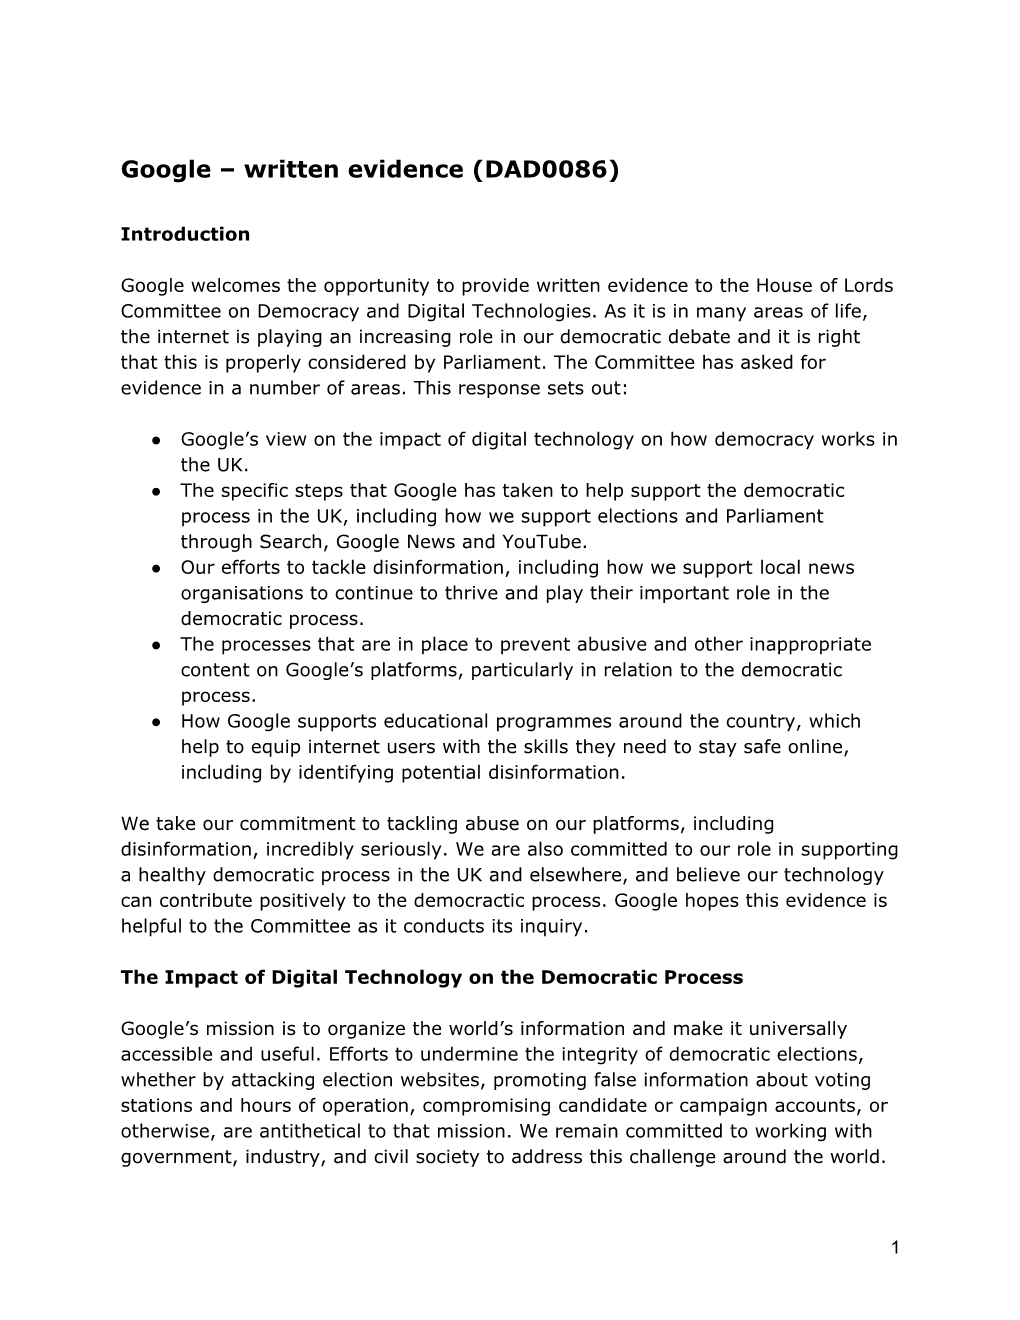 Google – Written Evidence (DAD0086)